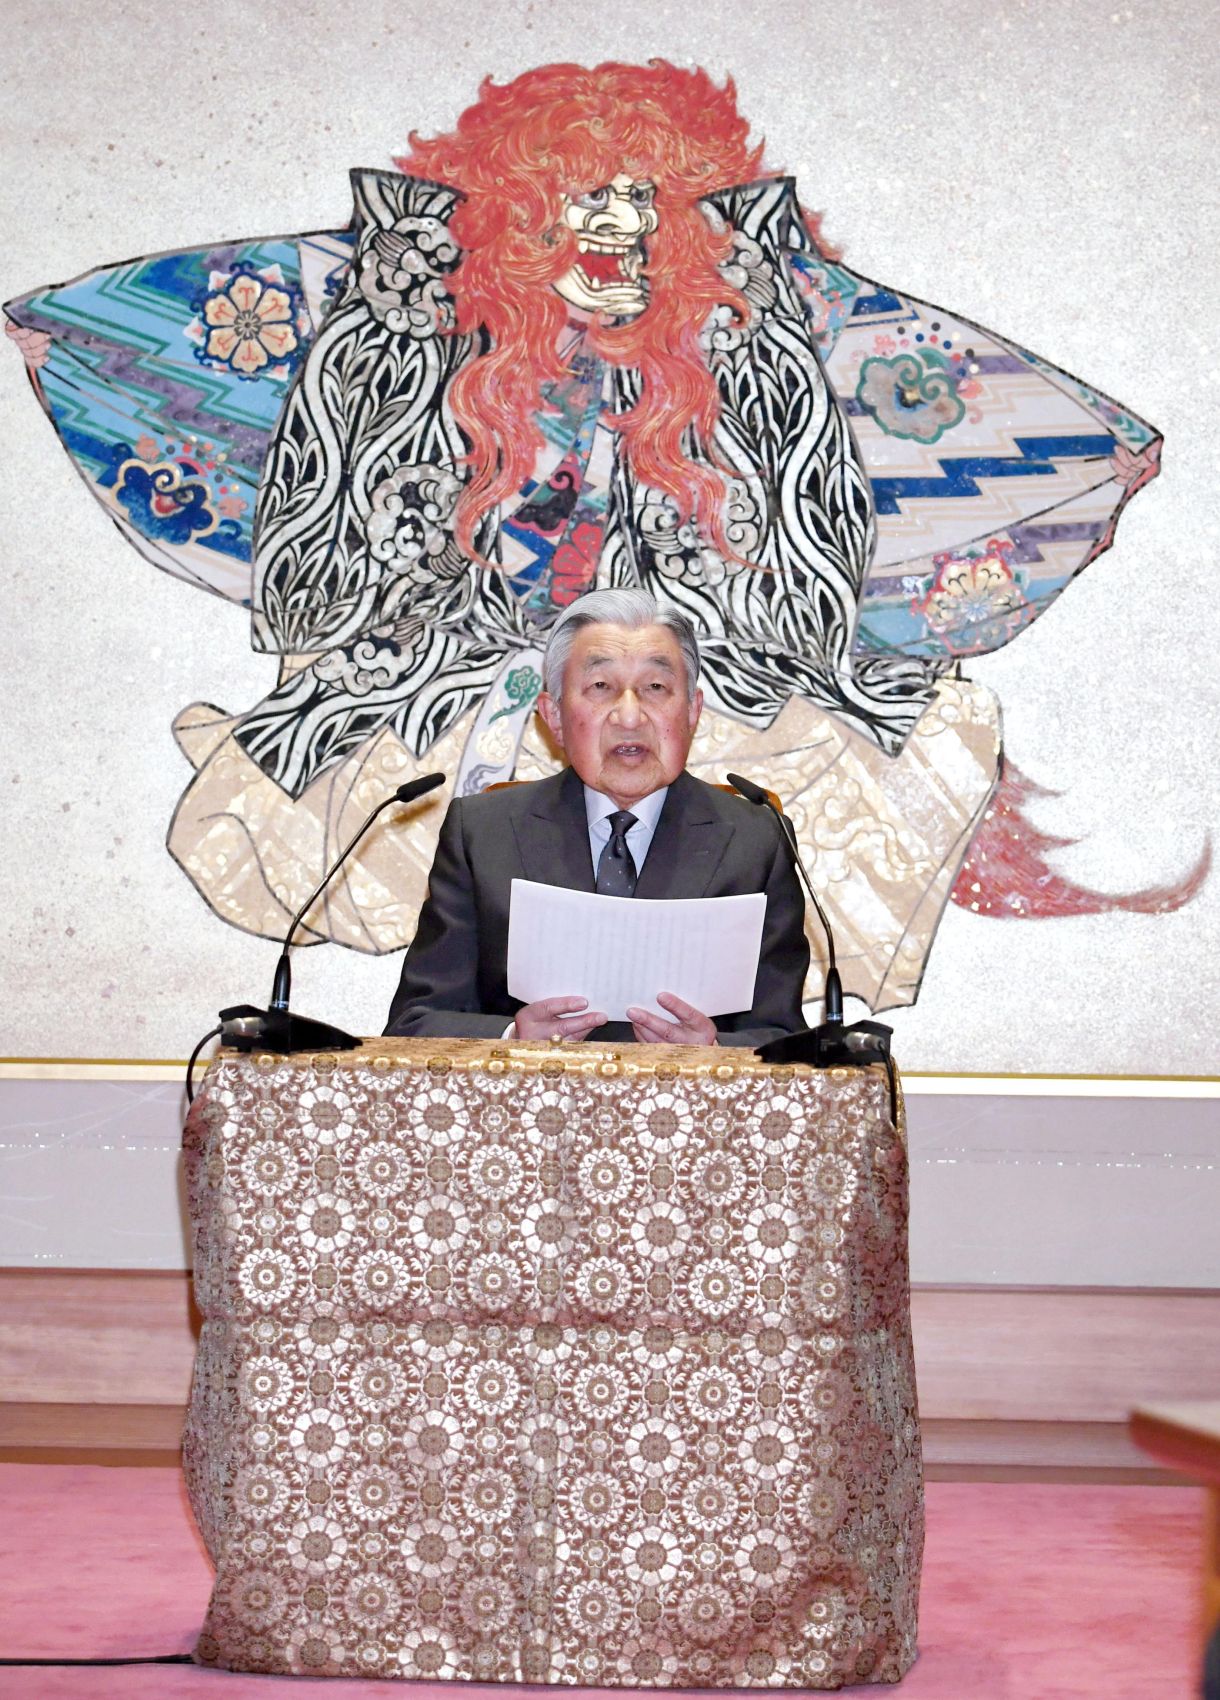 EDITORIAL | A Renewed Appreciation of the Emperor on His Final Birthday in the Heisei Era